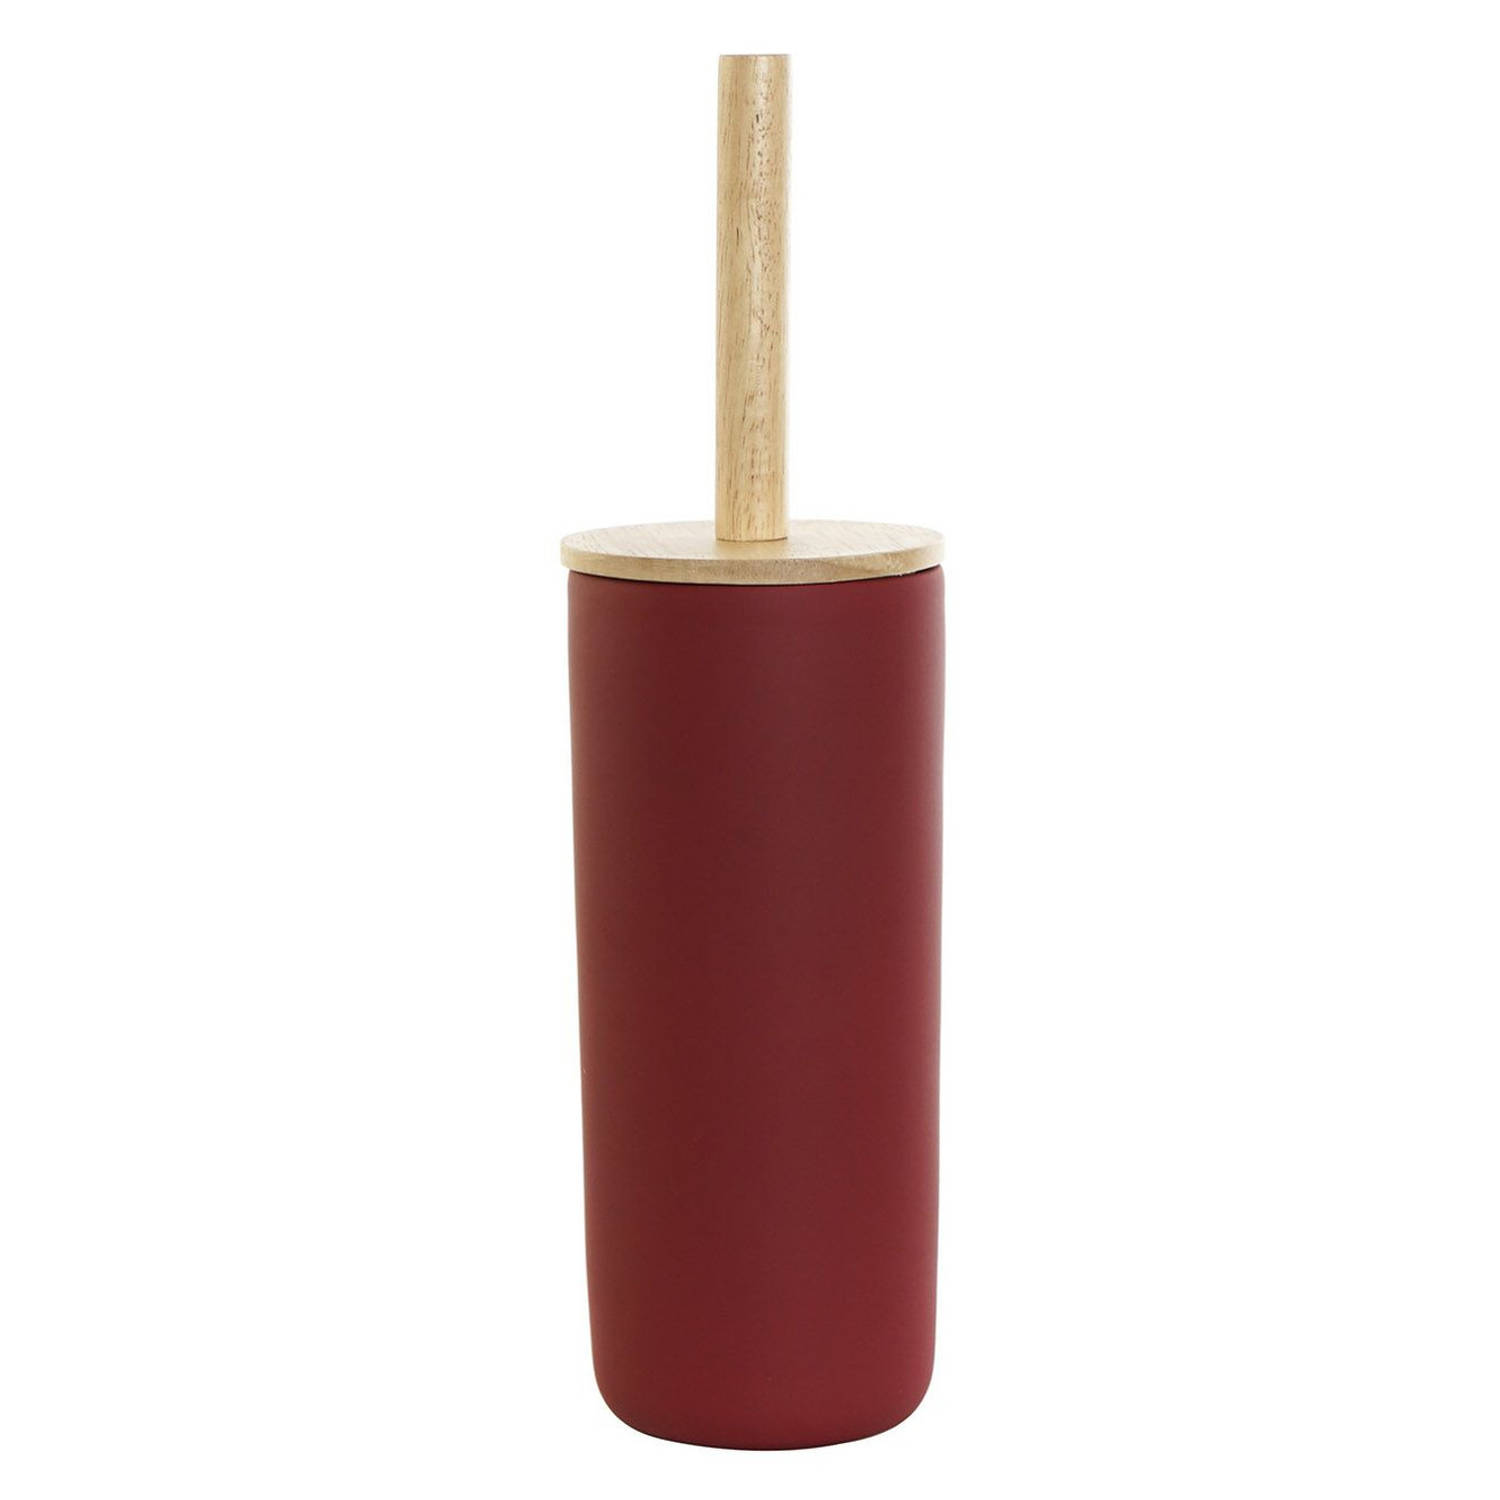 zuiden Verward haai Wc-borstel/toiletborstel met houder rood 39 cm van bamboe/steen -  Toiletgarnituur | Blokker